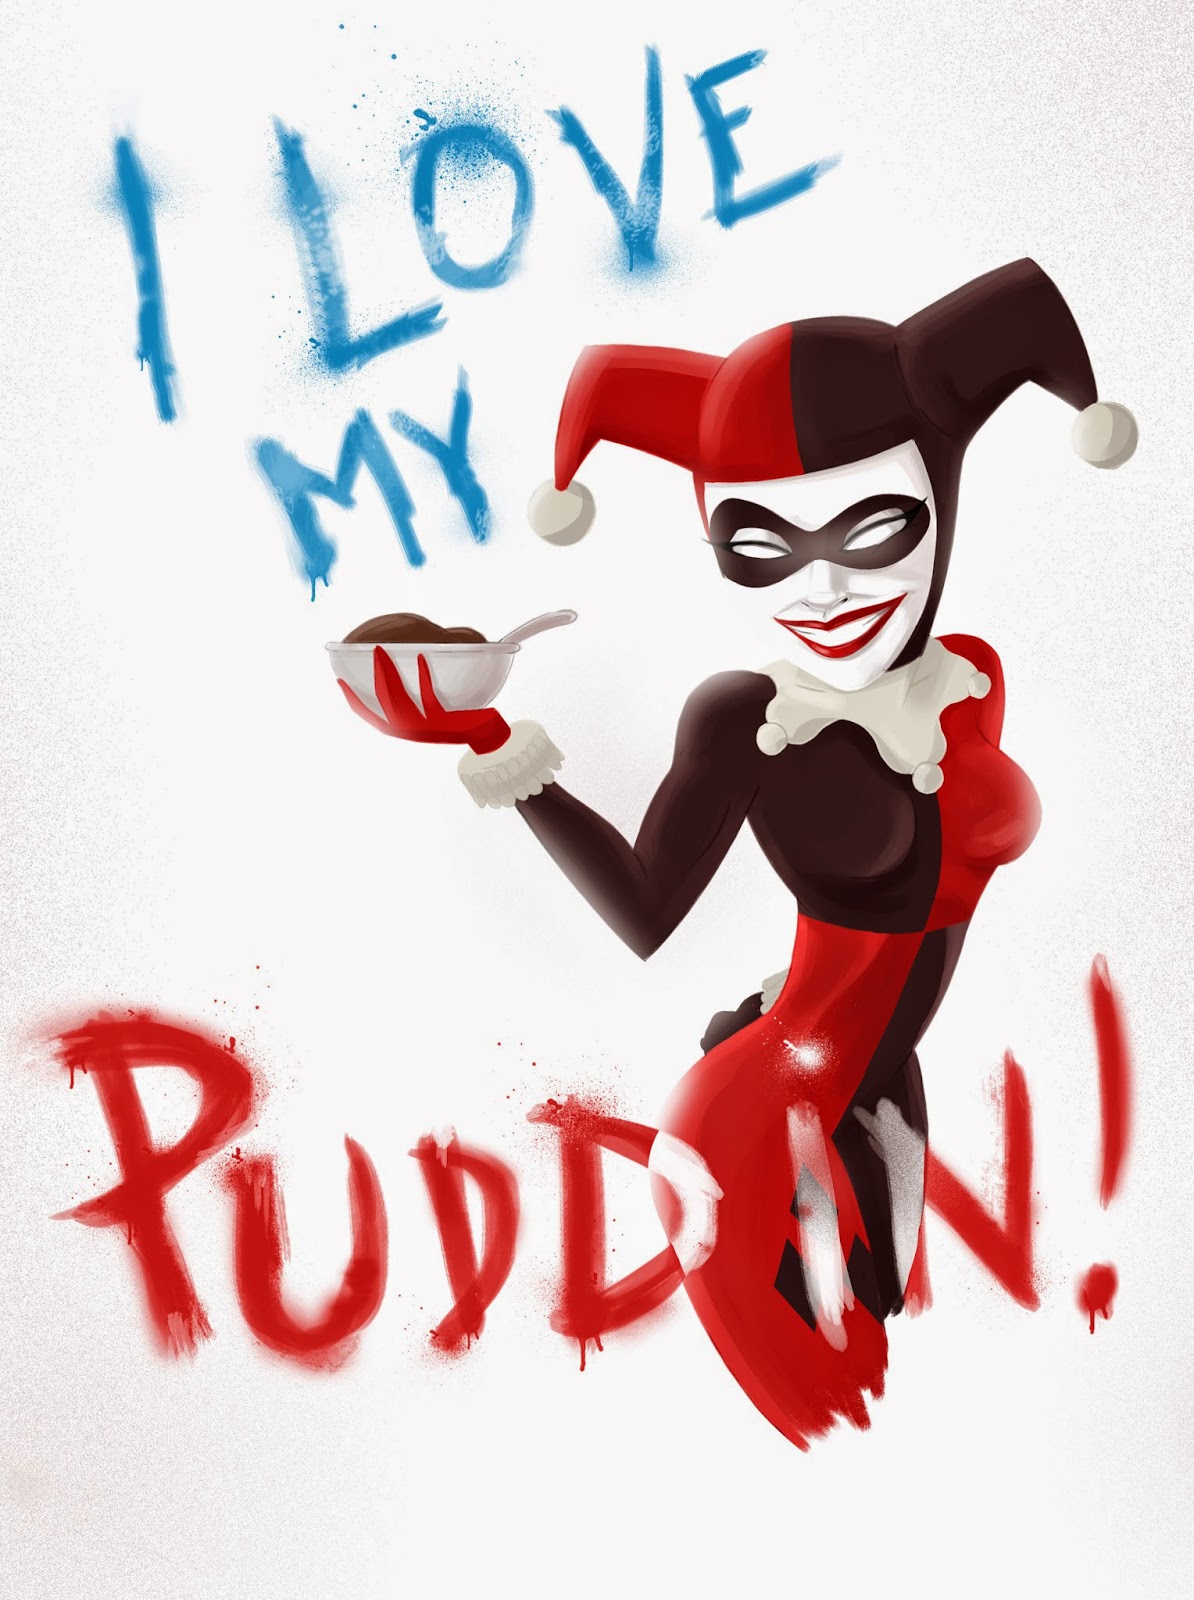 THE SLATCAVE: Harley Quinn loves her puddin'!